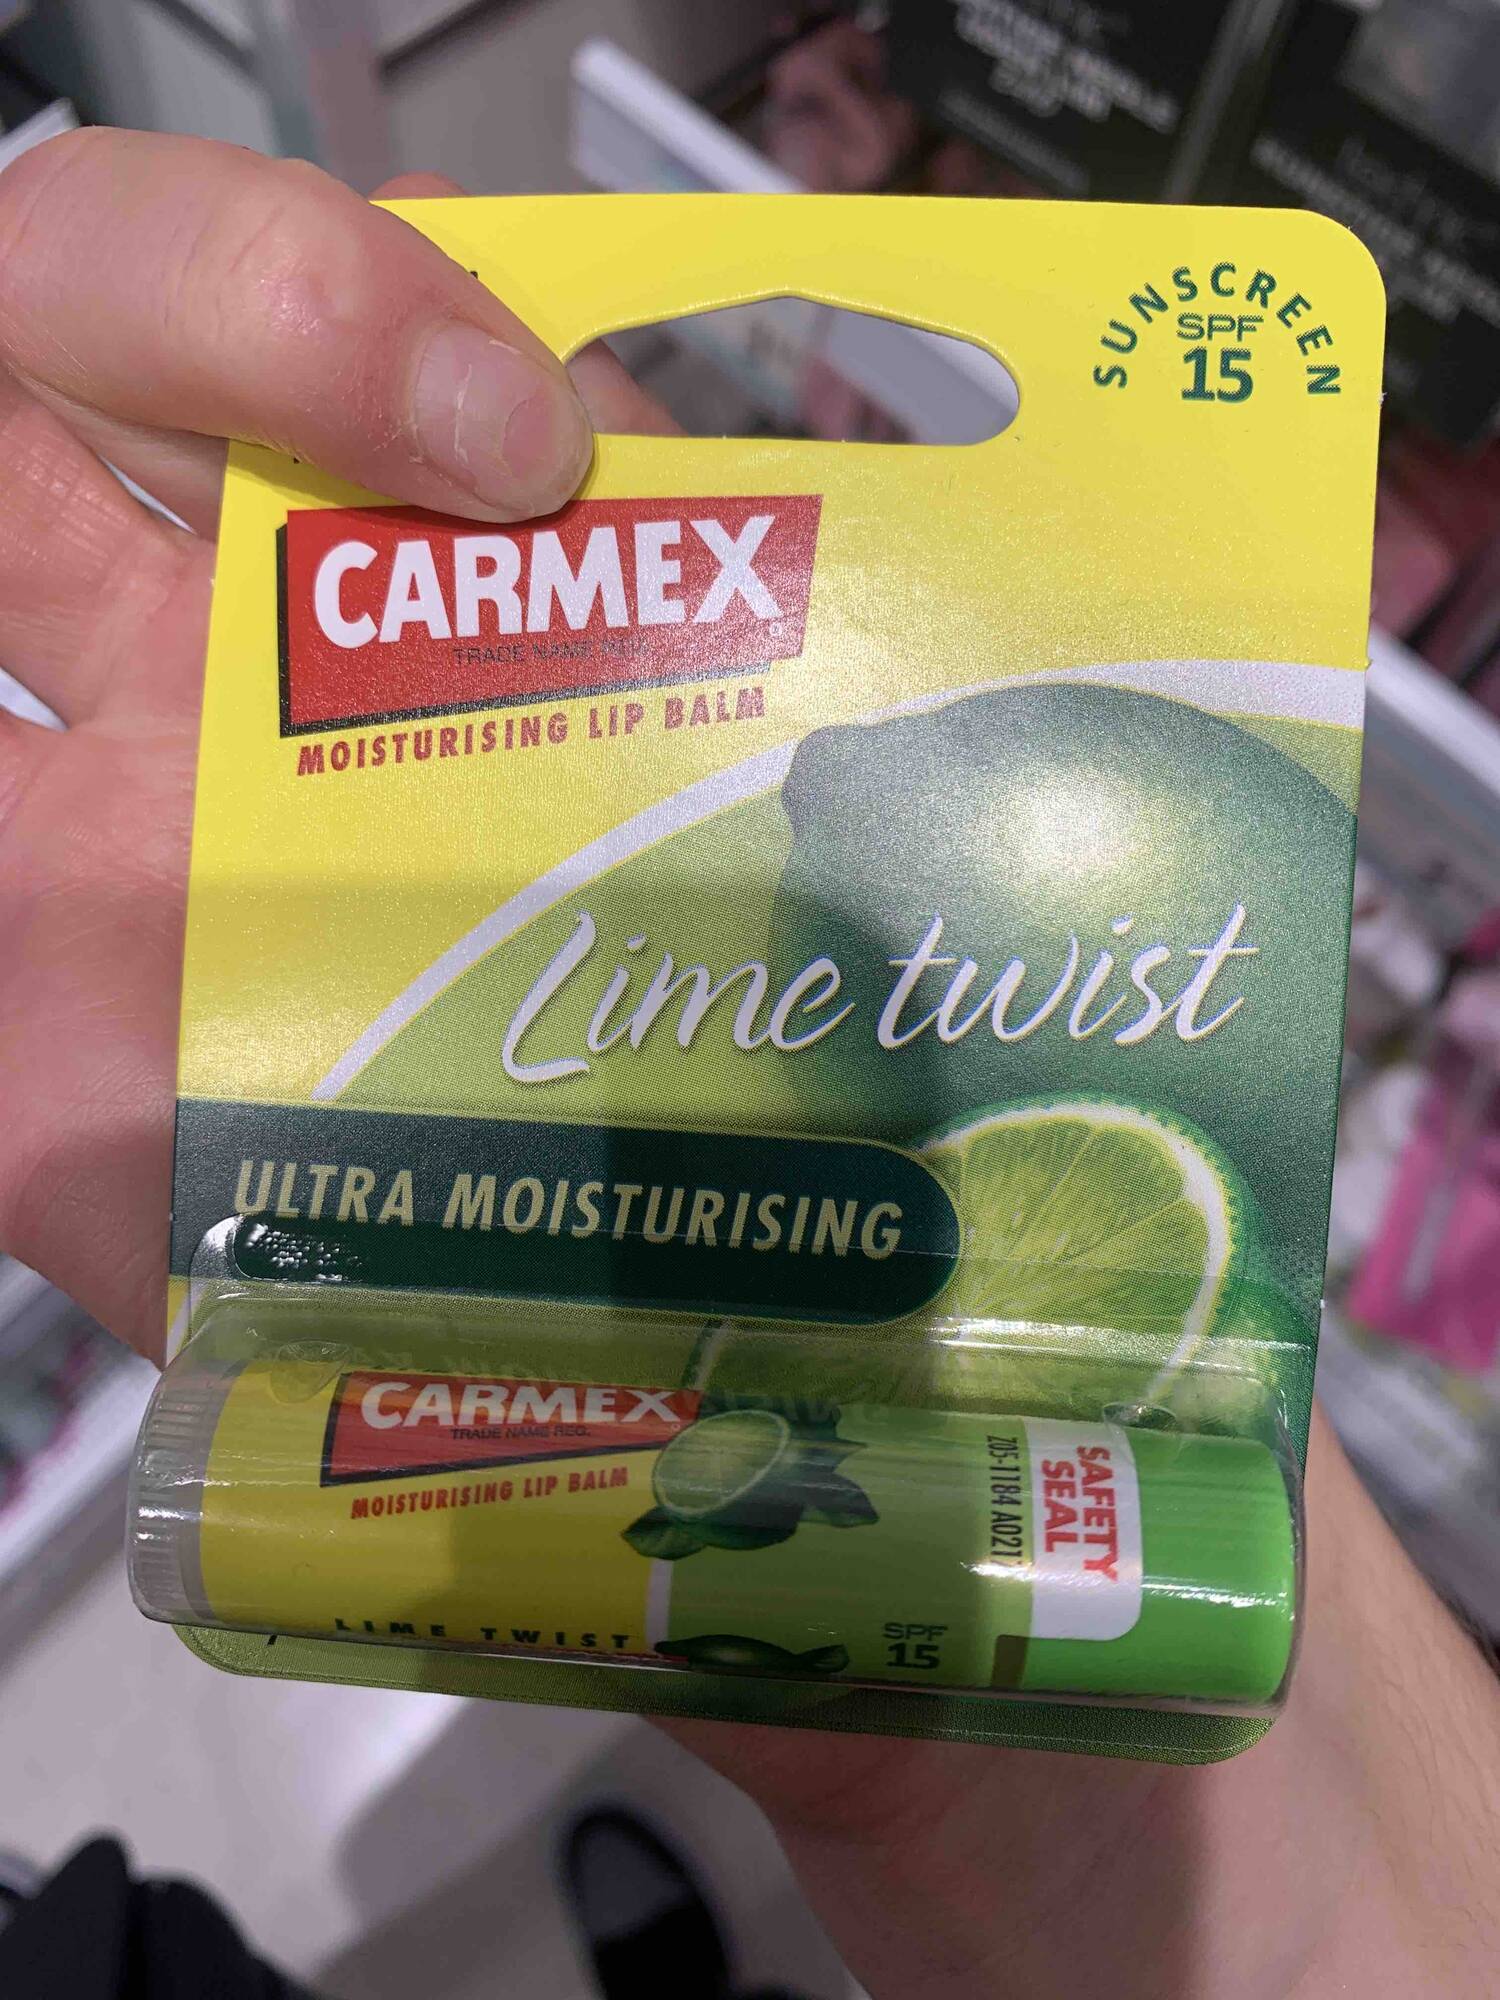 CARMEX - Lime twist - Moisturising lip balm